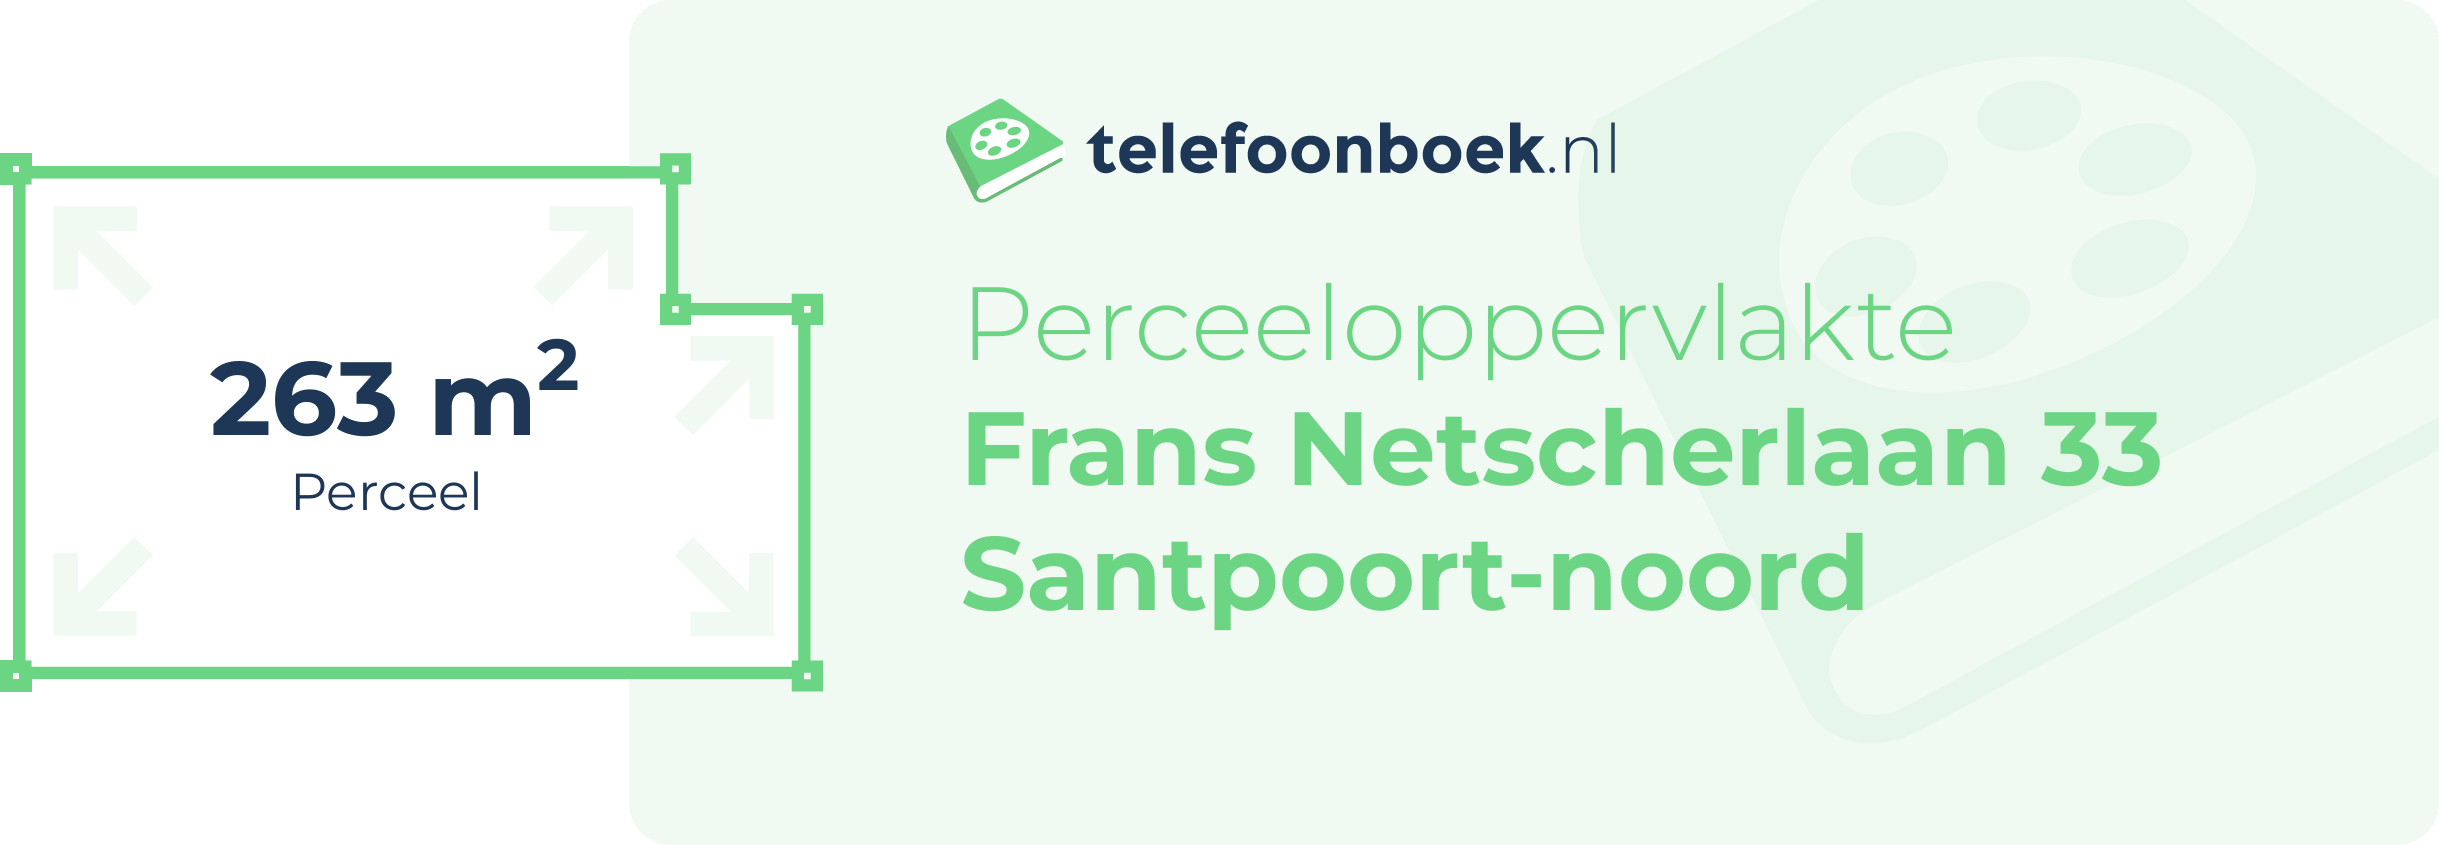 Perceeloppervlakte Frans Netscherlaan 33 Santpoort-Noord